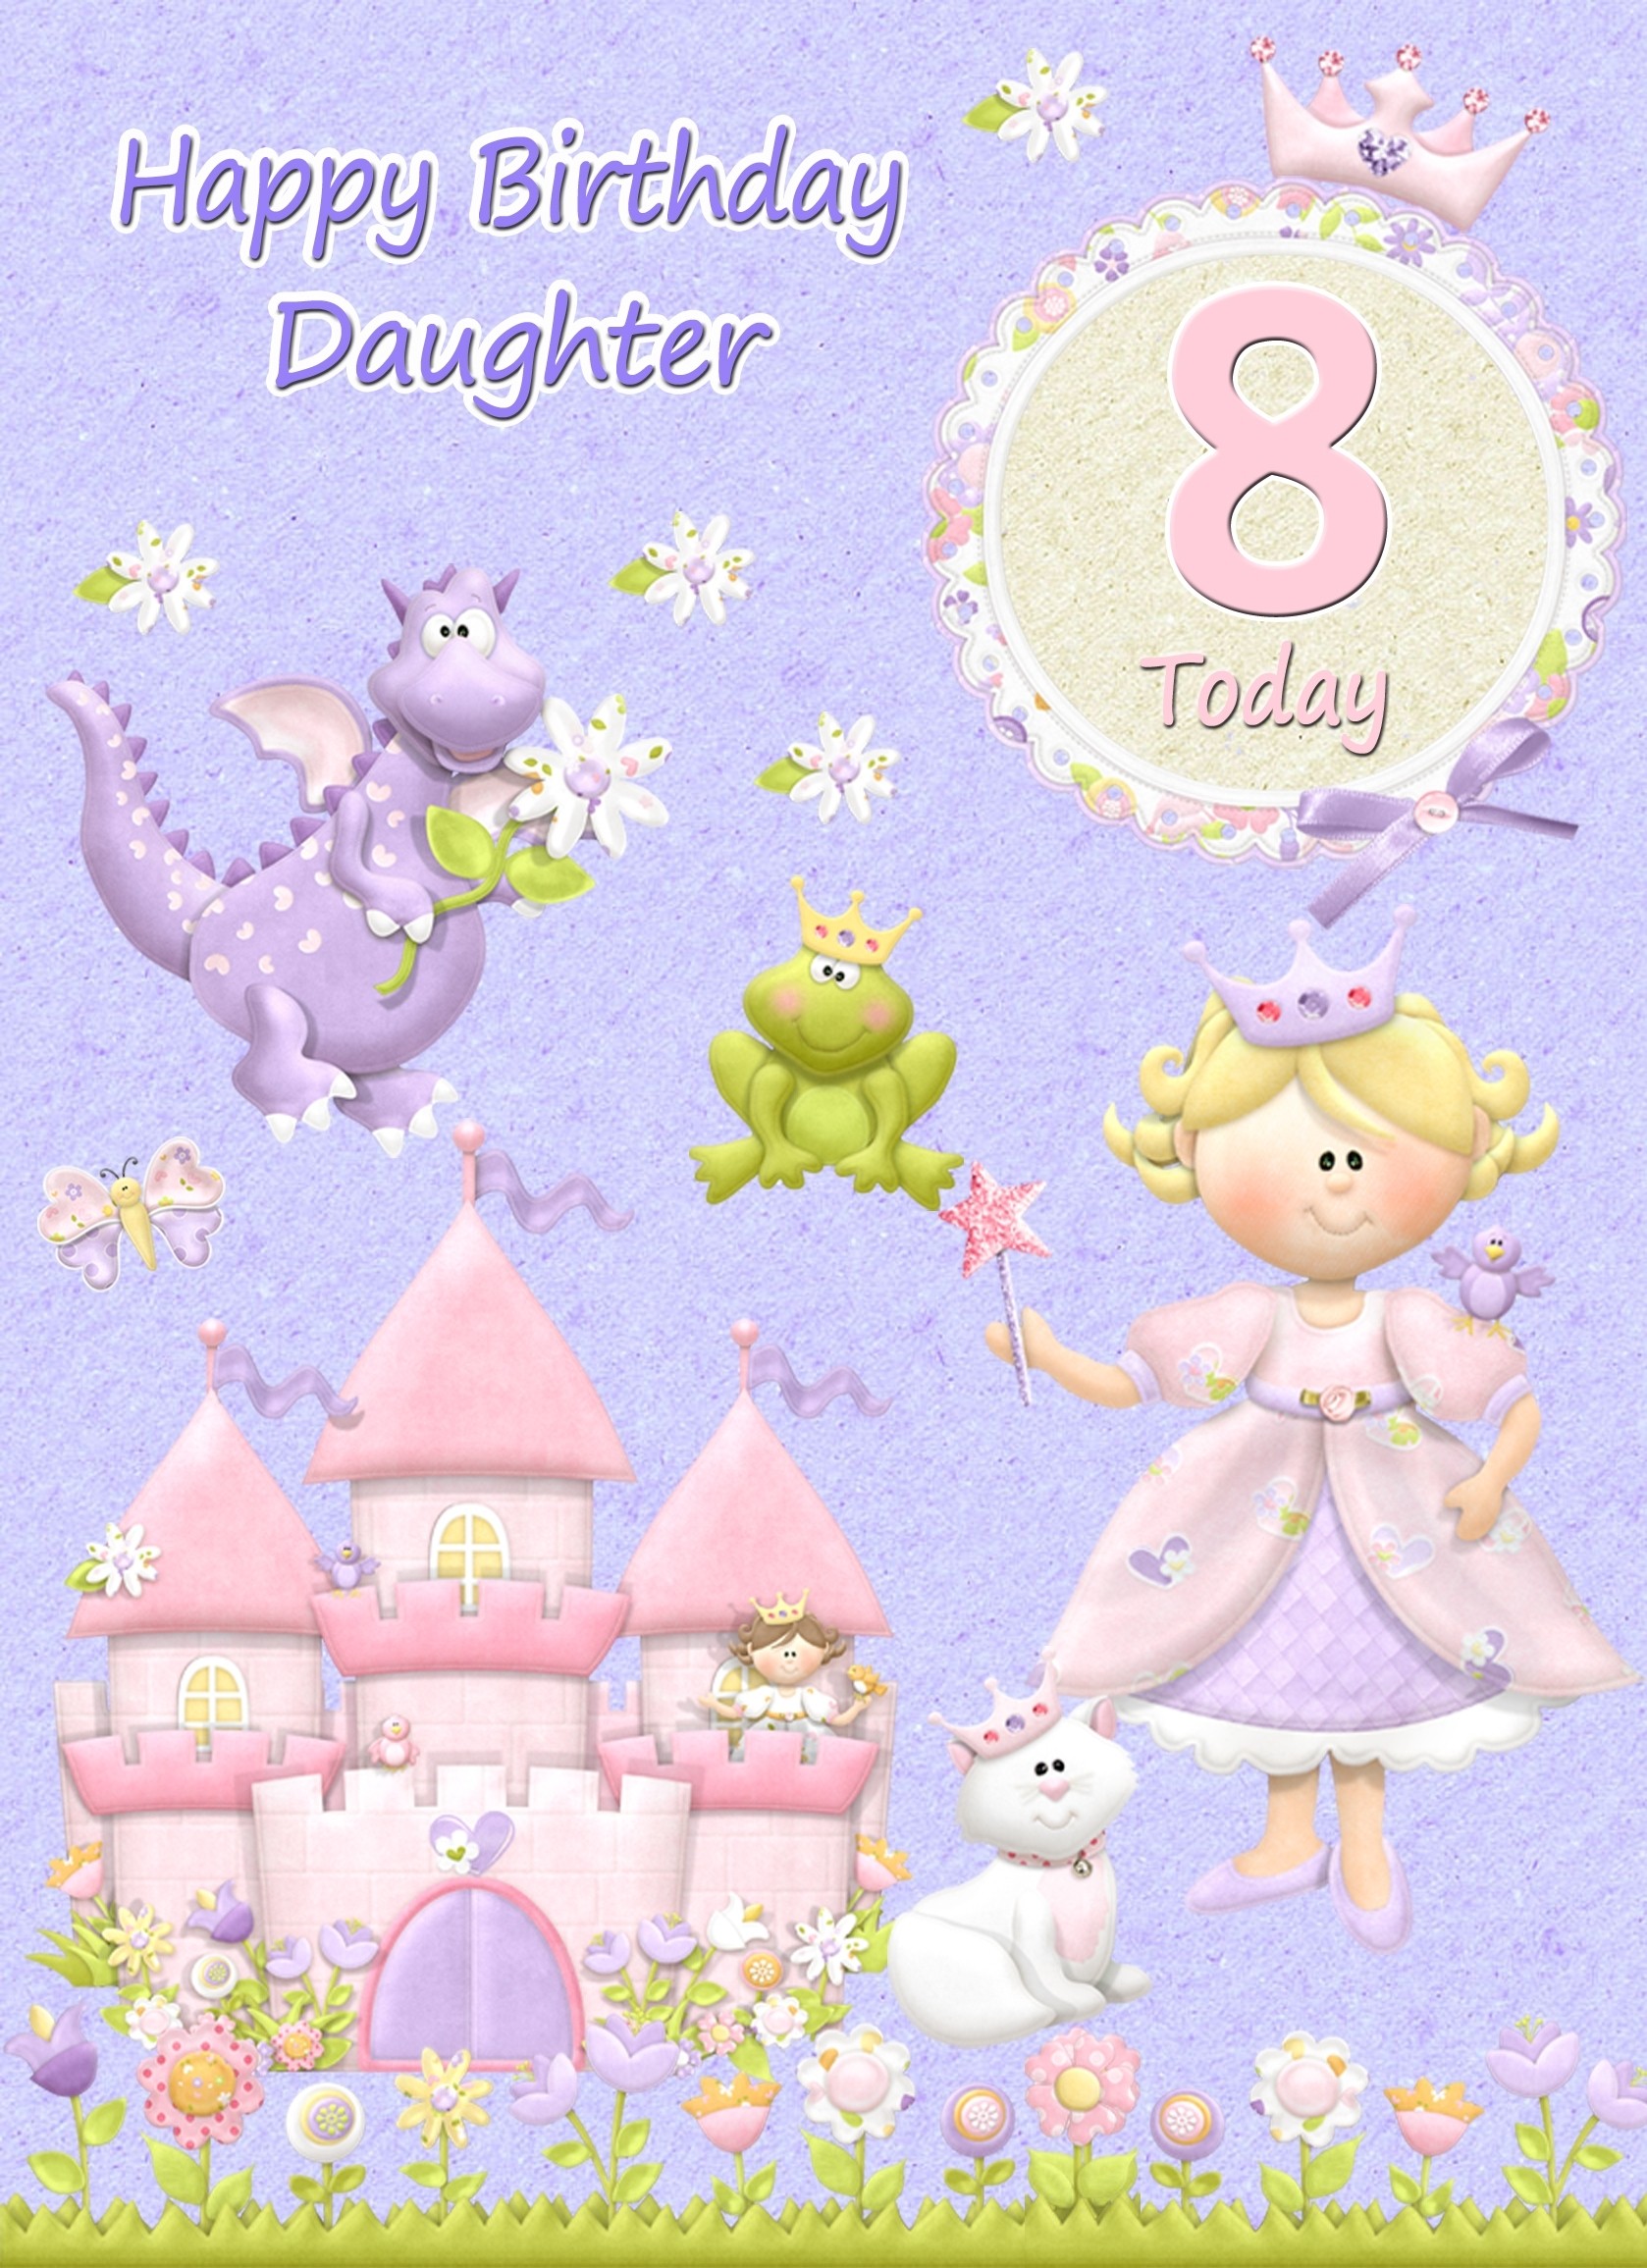 Kids 8th Birthday Princess Cartoon Card for Daughter